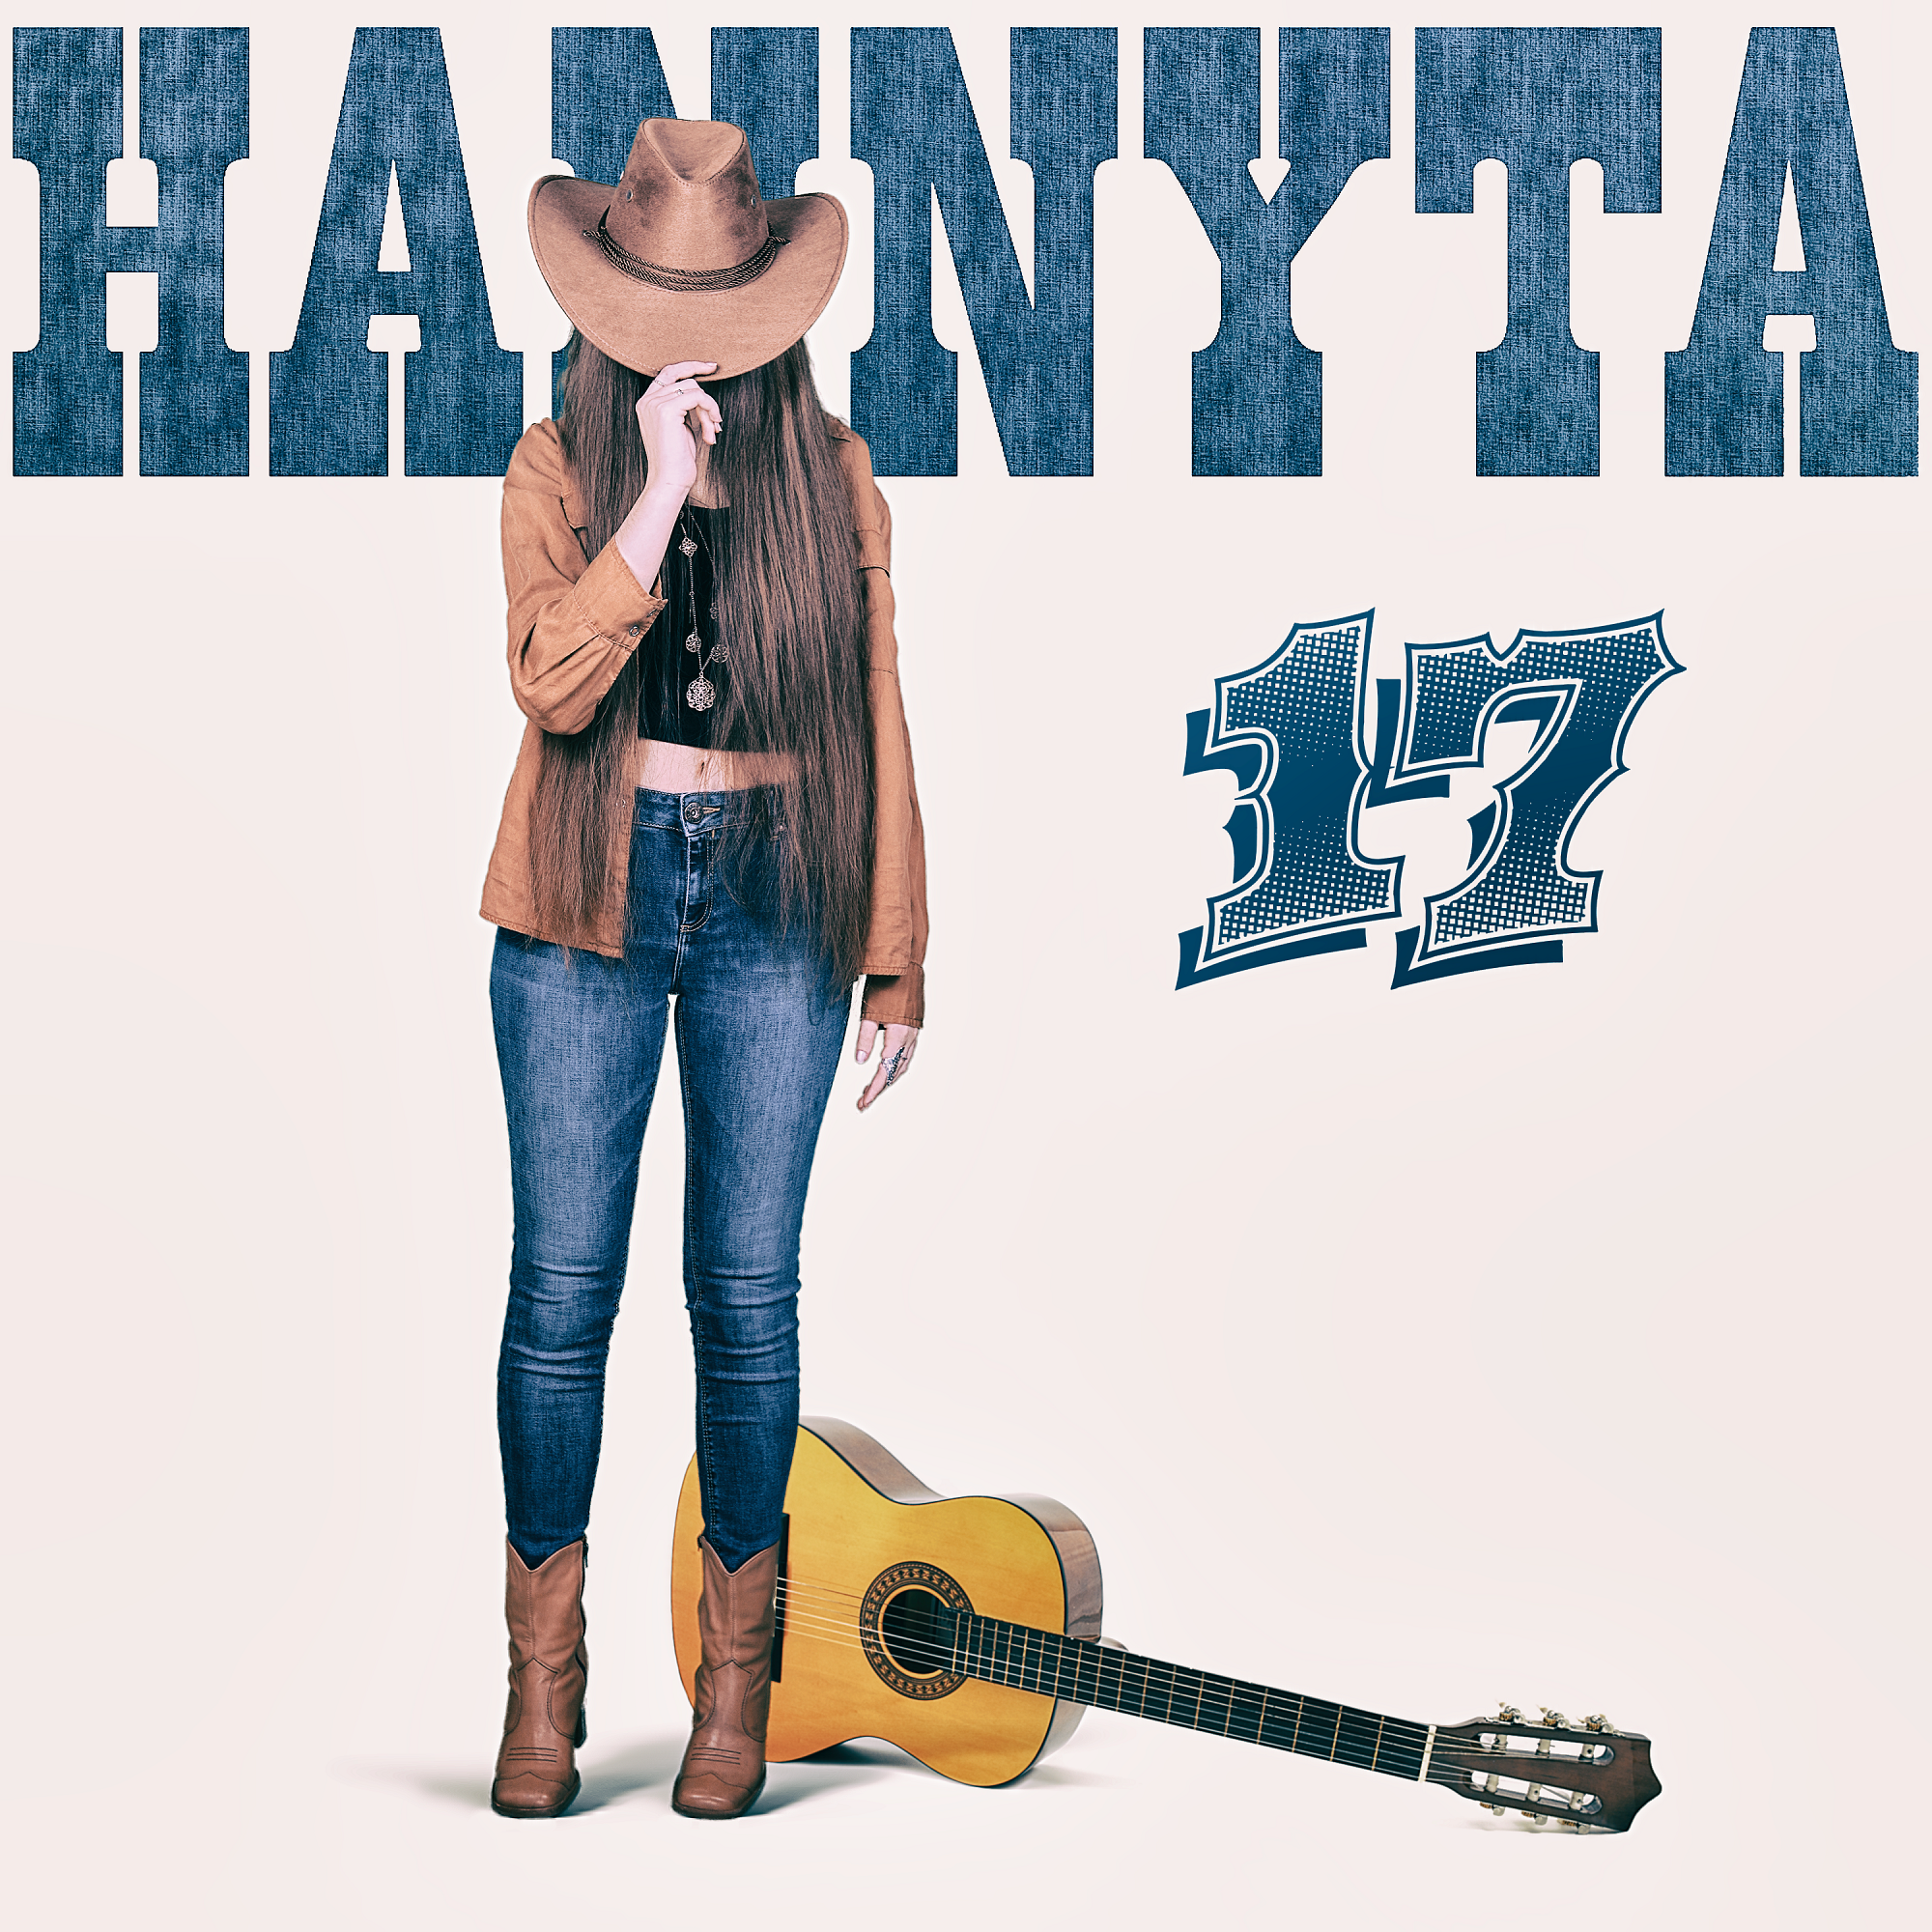 Hannyta – “17” (Houson Boombox Remix)